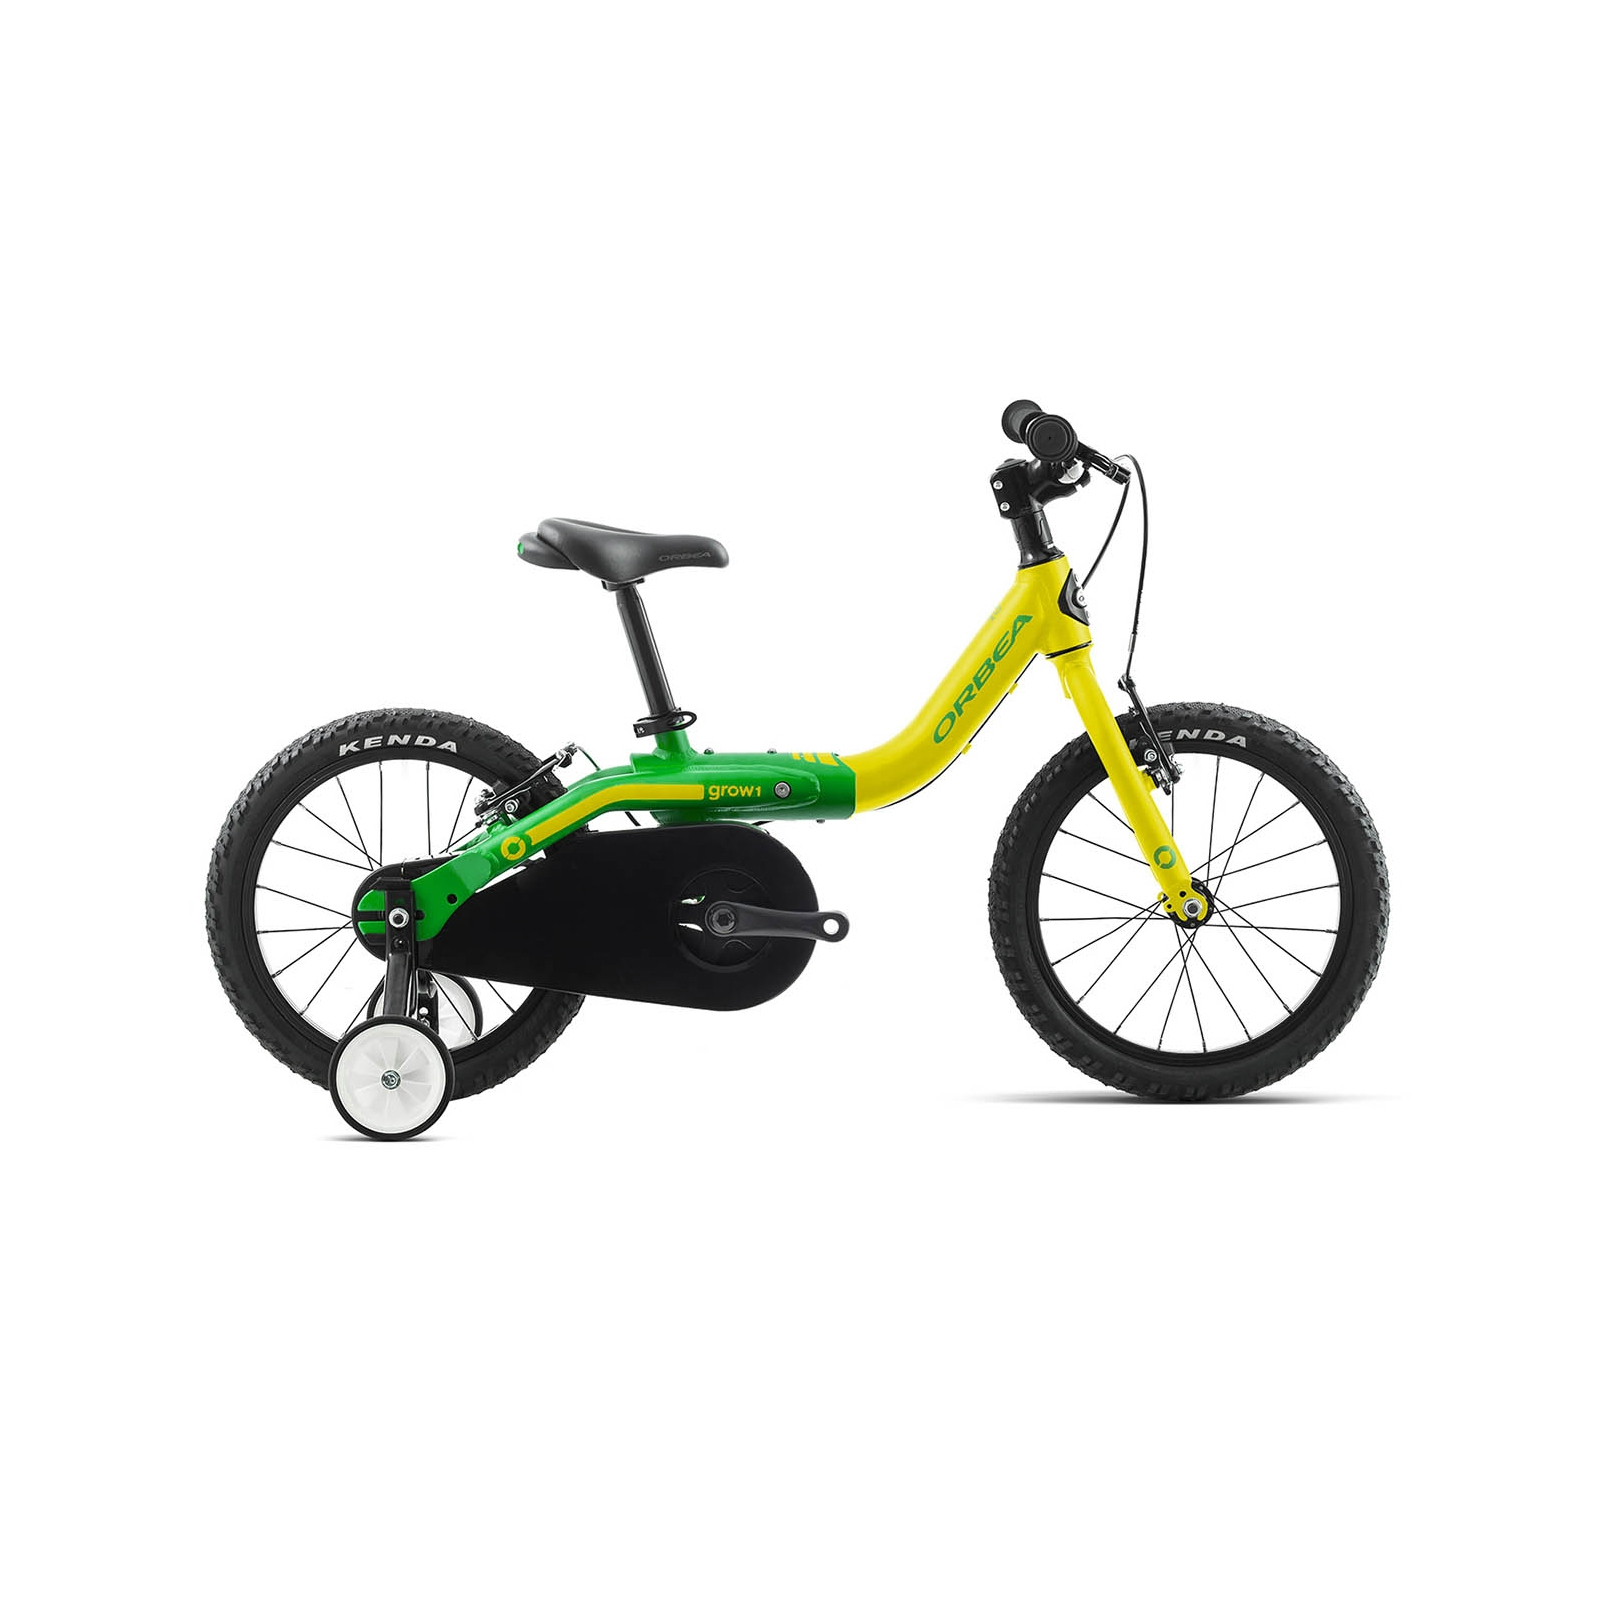 Дитячий велосипед Orbea Grow 1 16" 2019 Pistachio - Green (J00216K7)